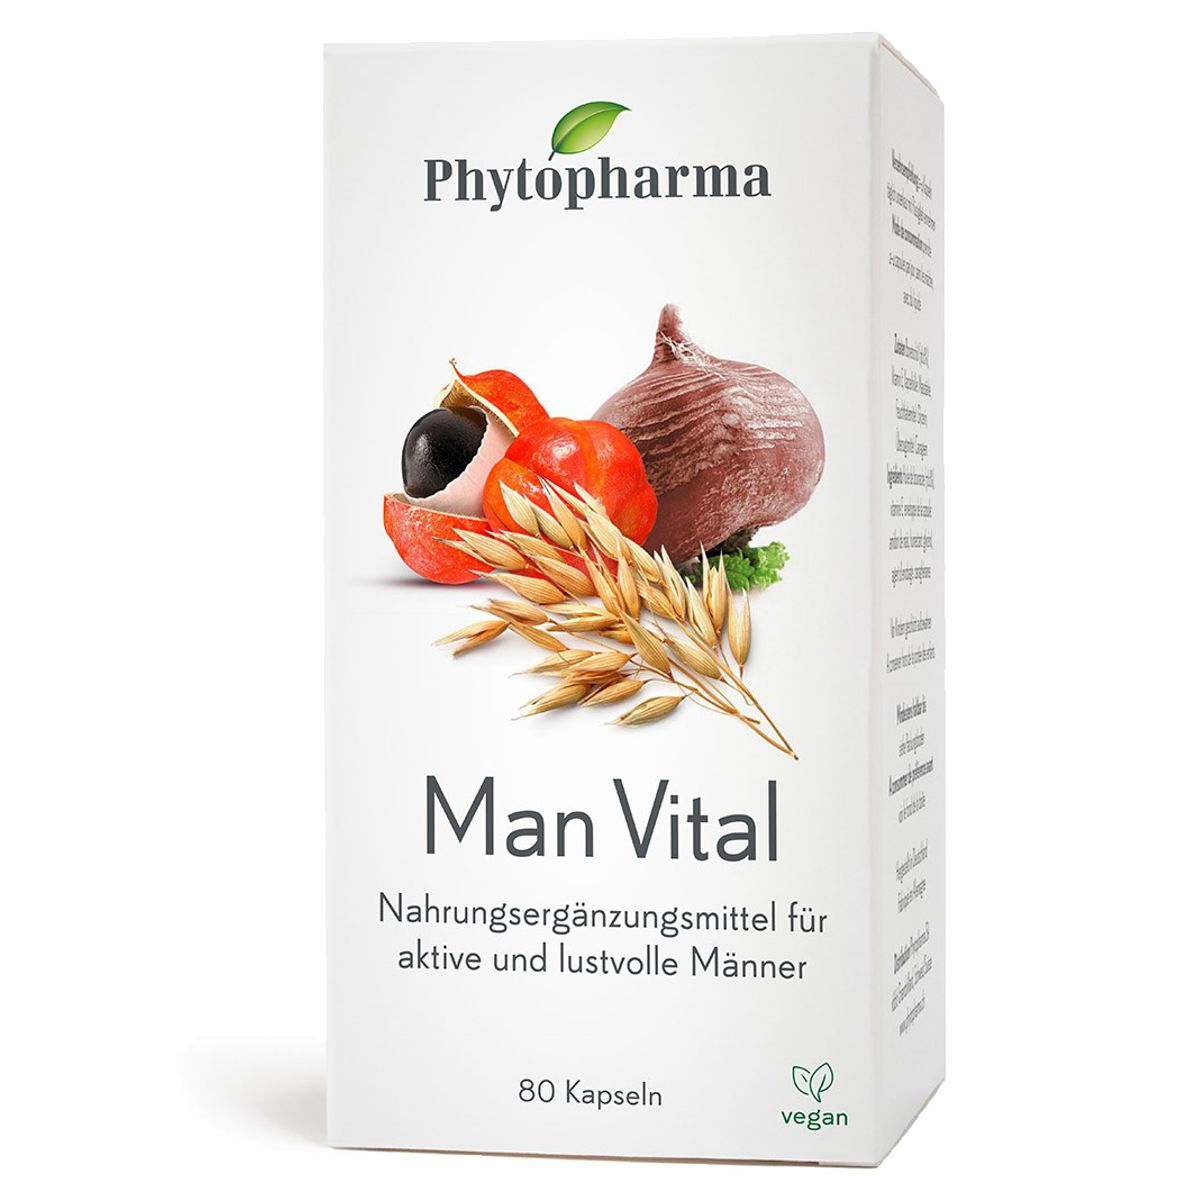 Phytopharma Man Vital Kapseln Dose 80 Stück